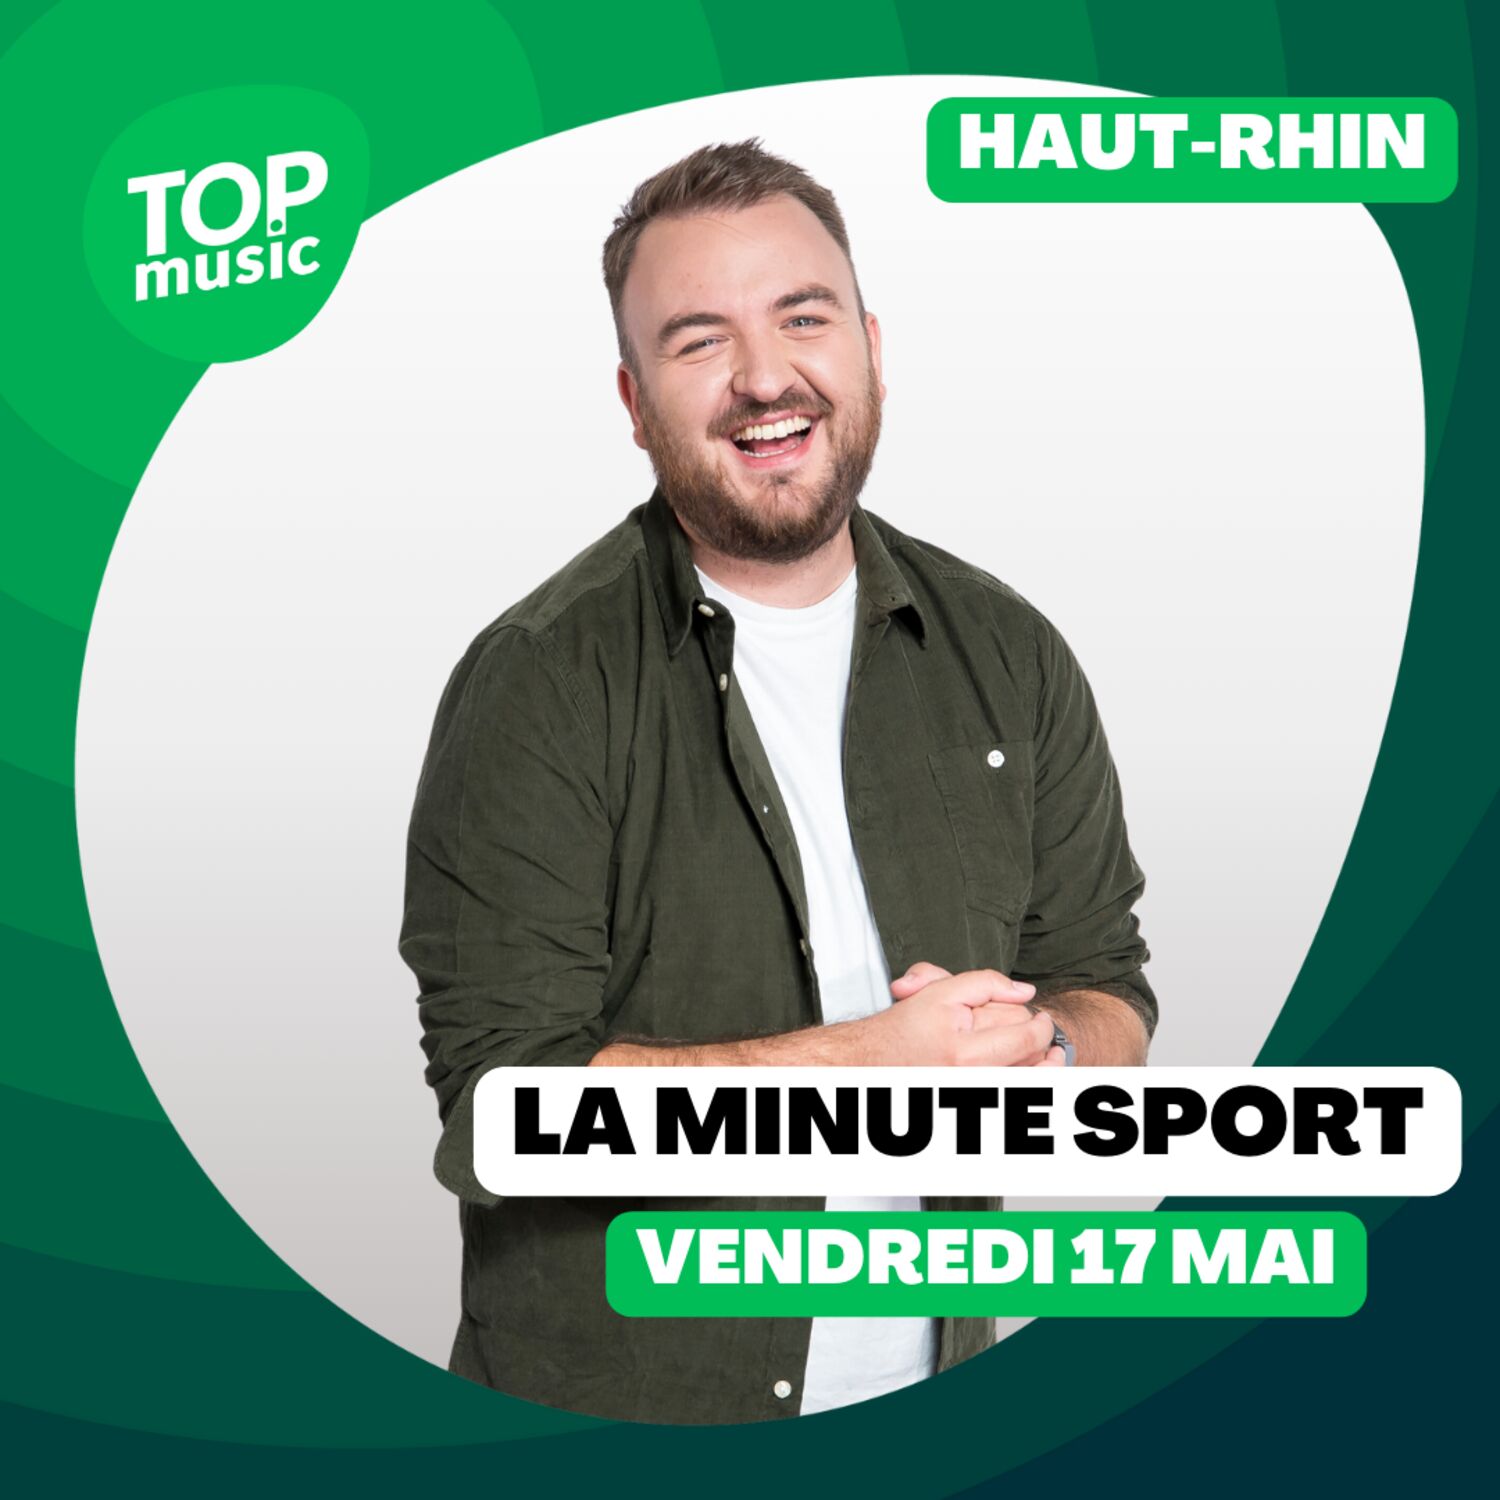 La Minute sport du Haut-Rhin - vendredi 17 mai